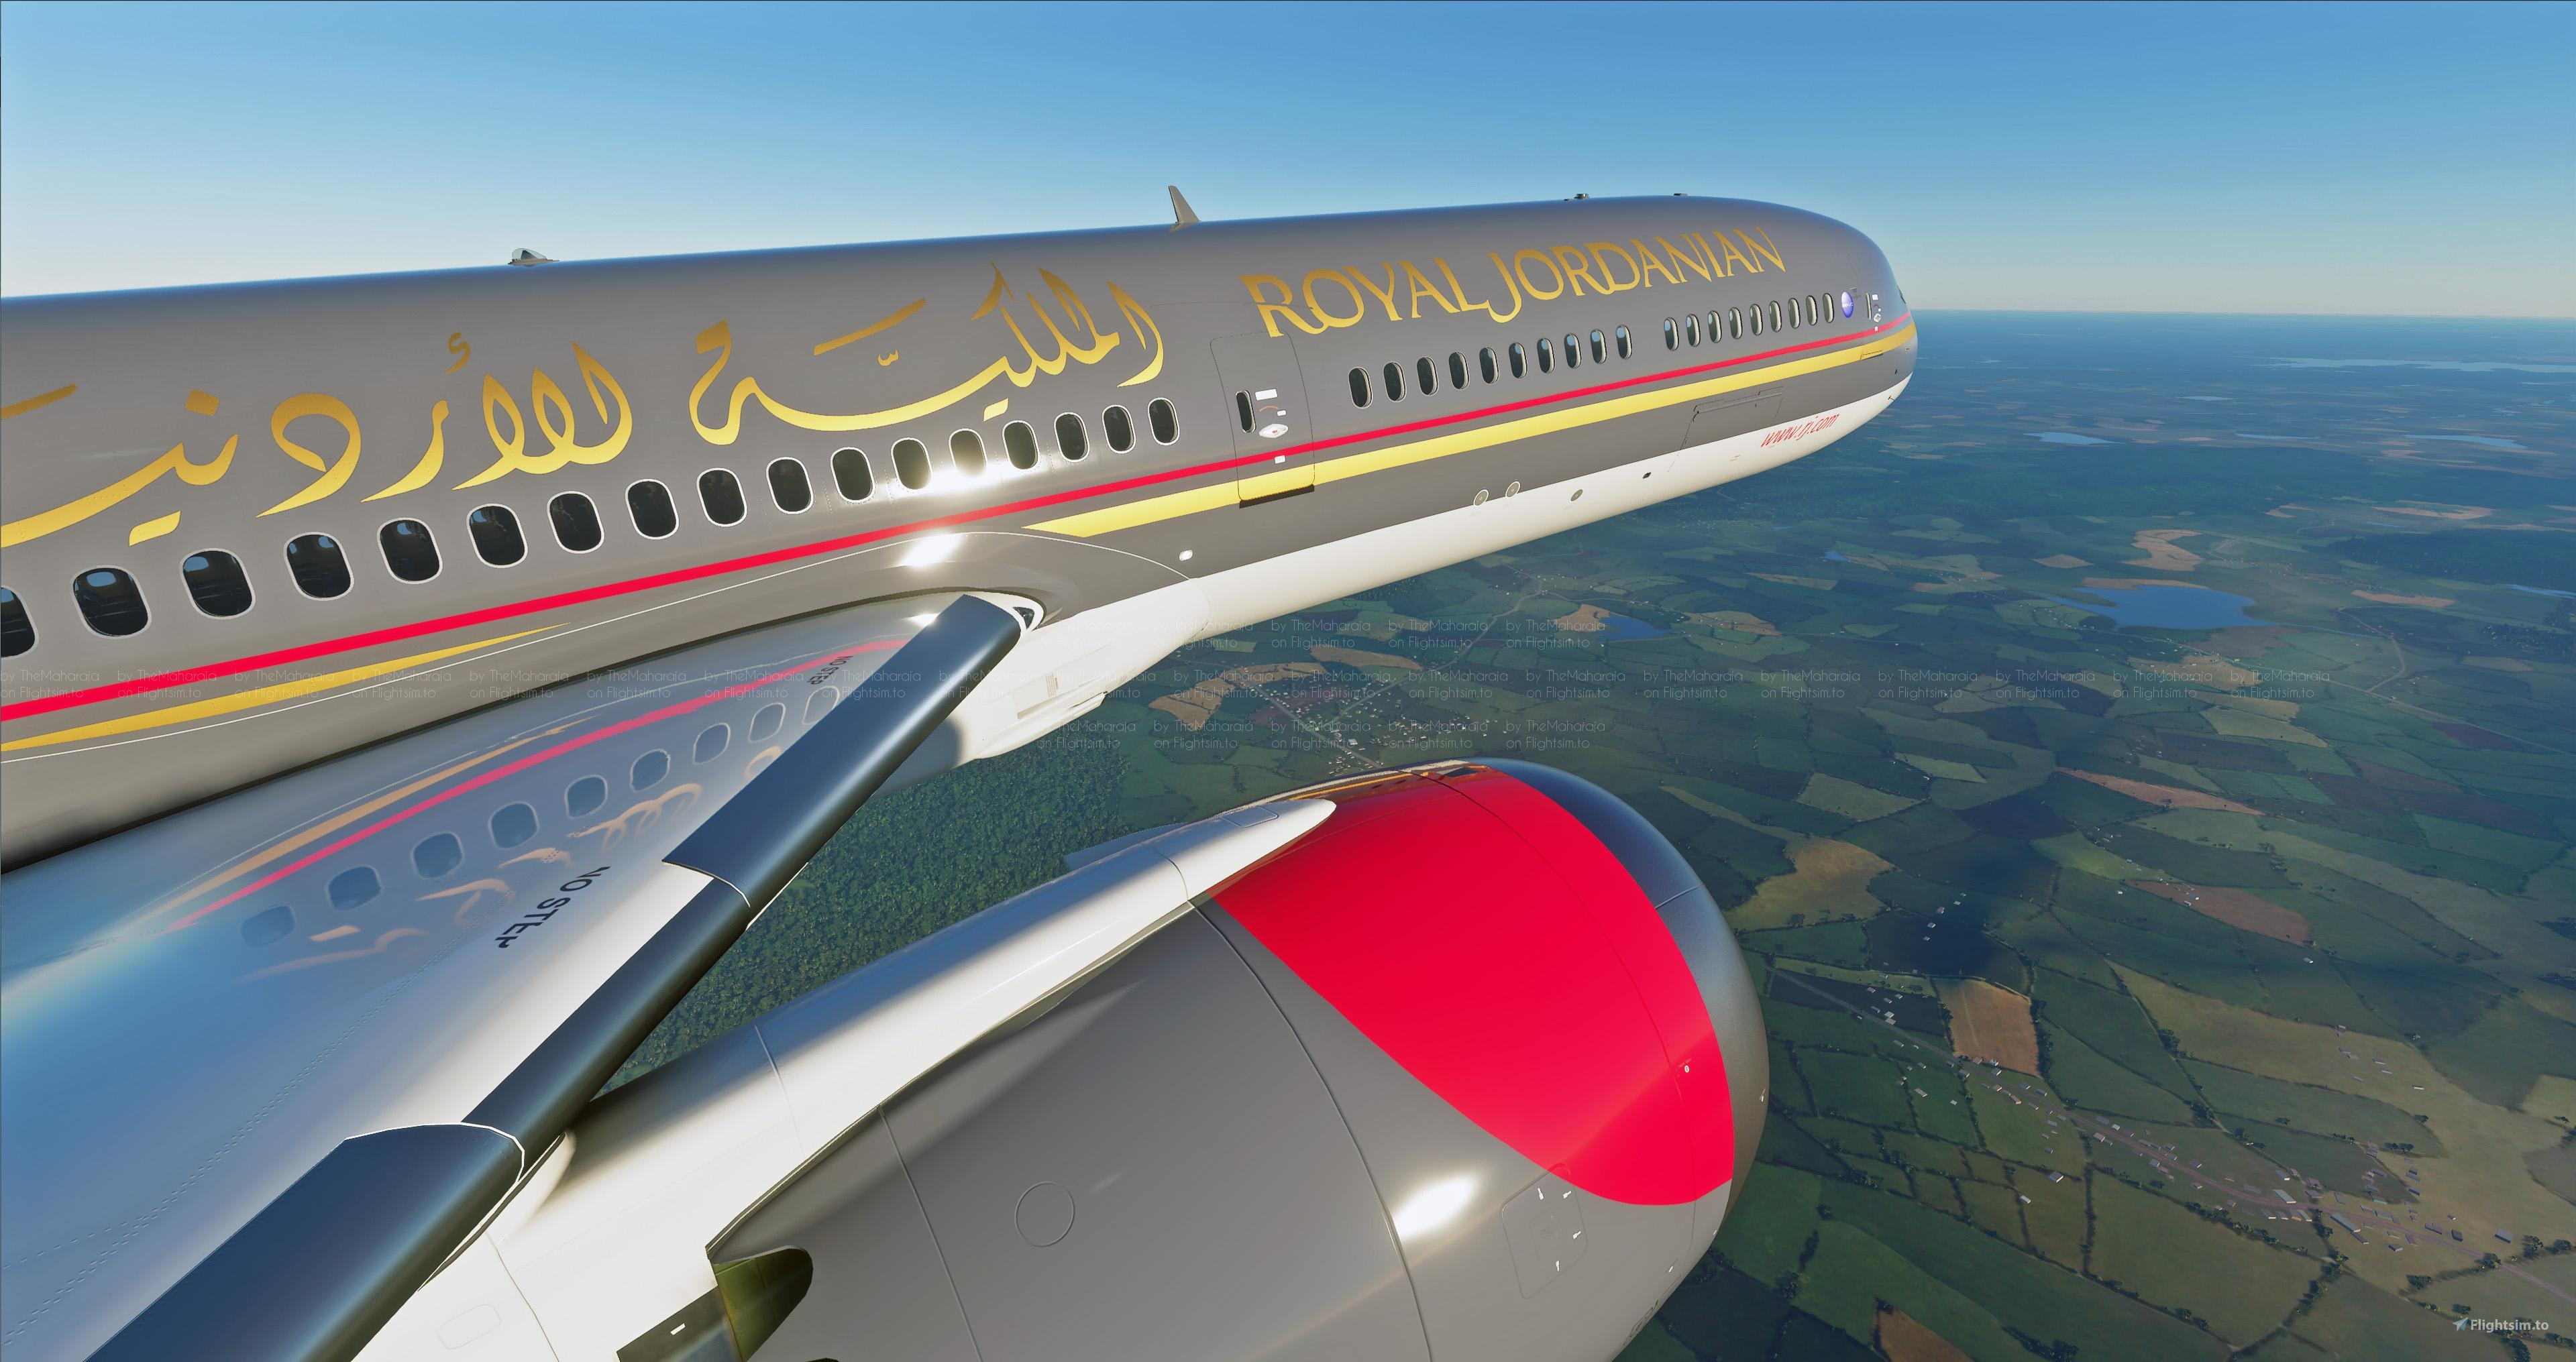 royal jordanian flight 111